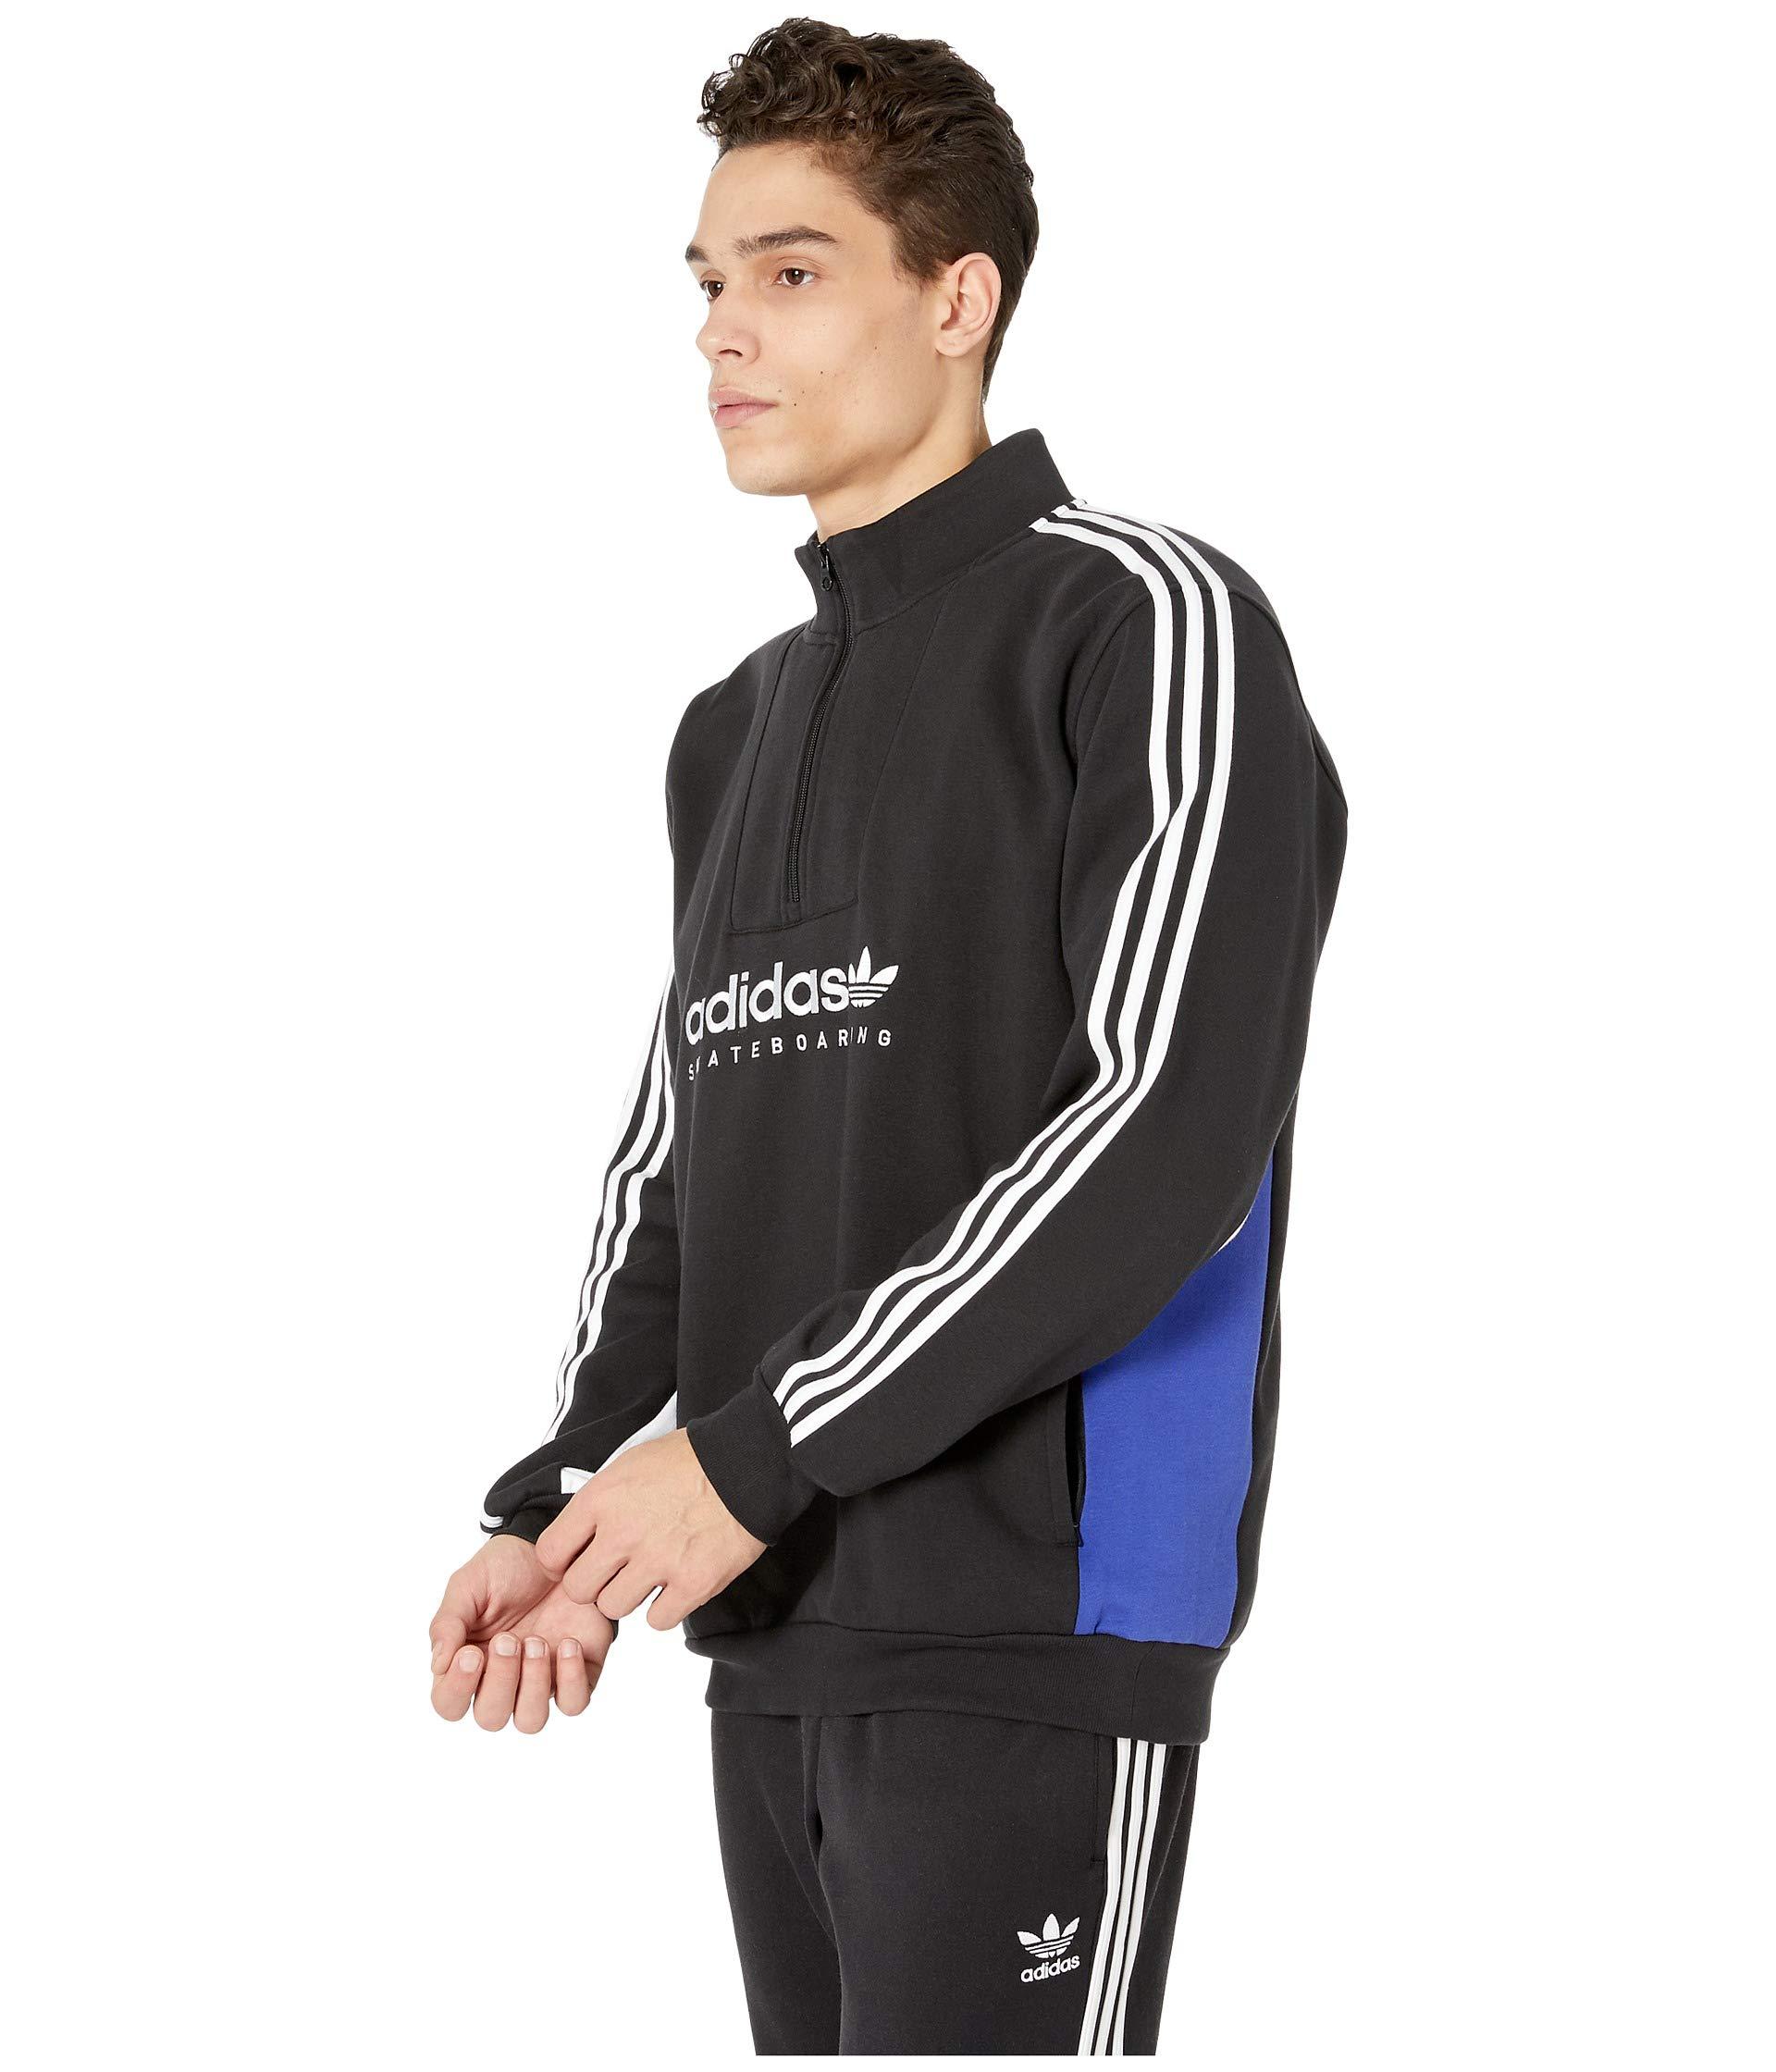 Adidas Skateboarding Apian Quarter-Zip Mock Neck Pullover Sweatshirt |  teachingcare.com